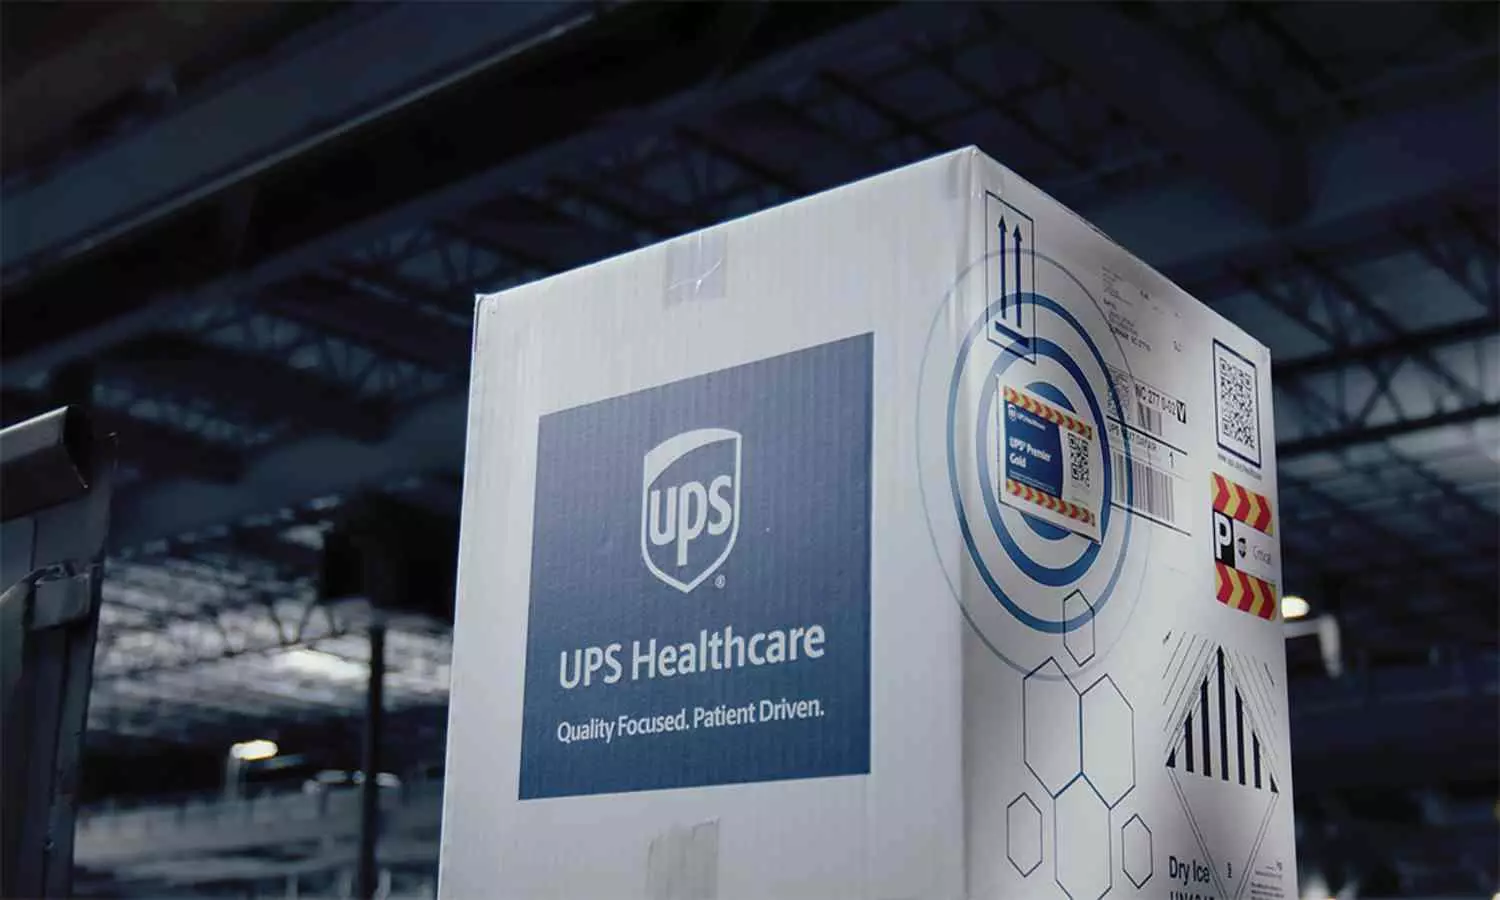 UPS Healthcare expands UPS Premier service across India